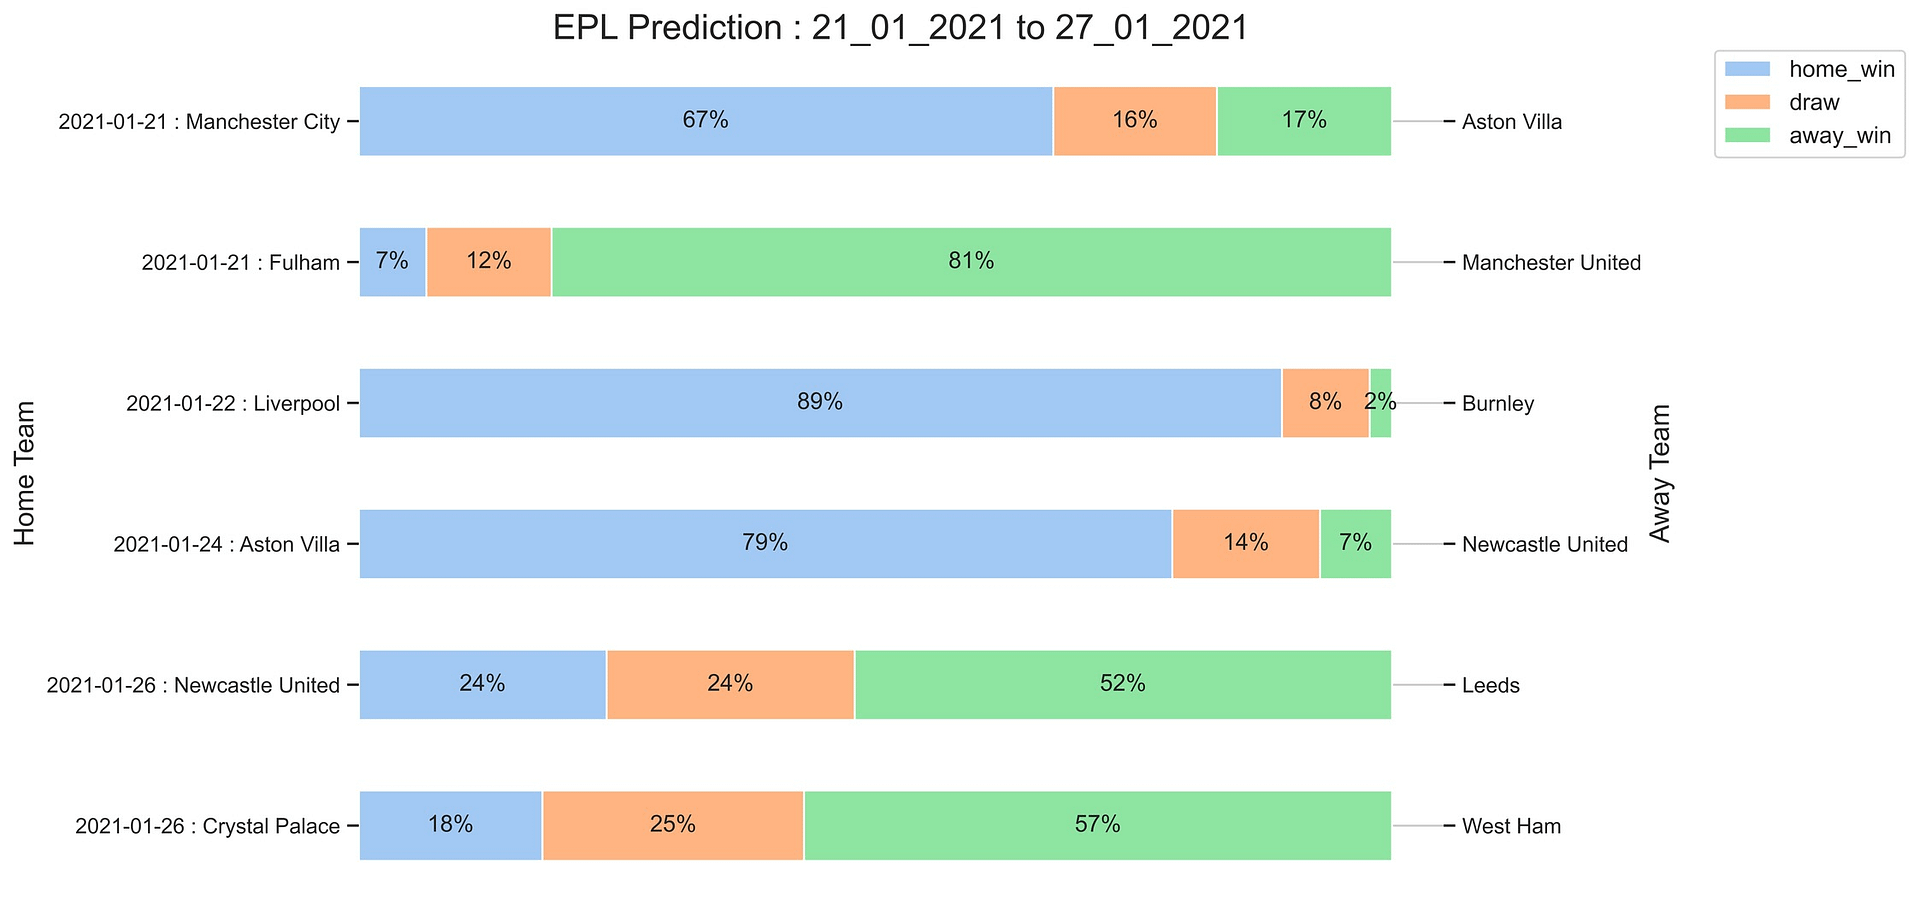 EPL_Prediction 21_01_2021